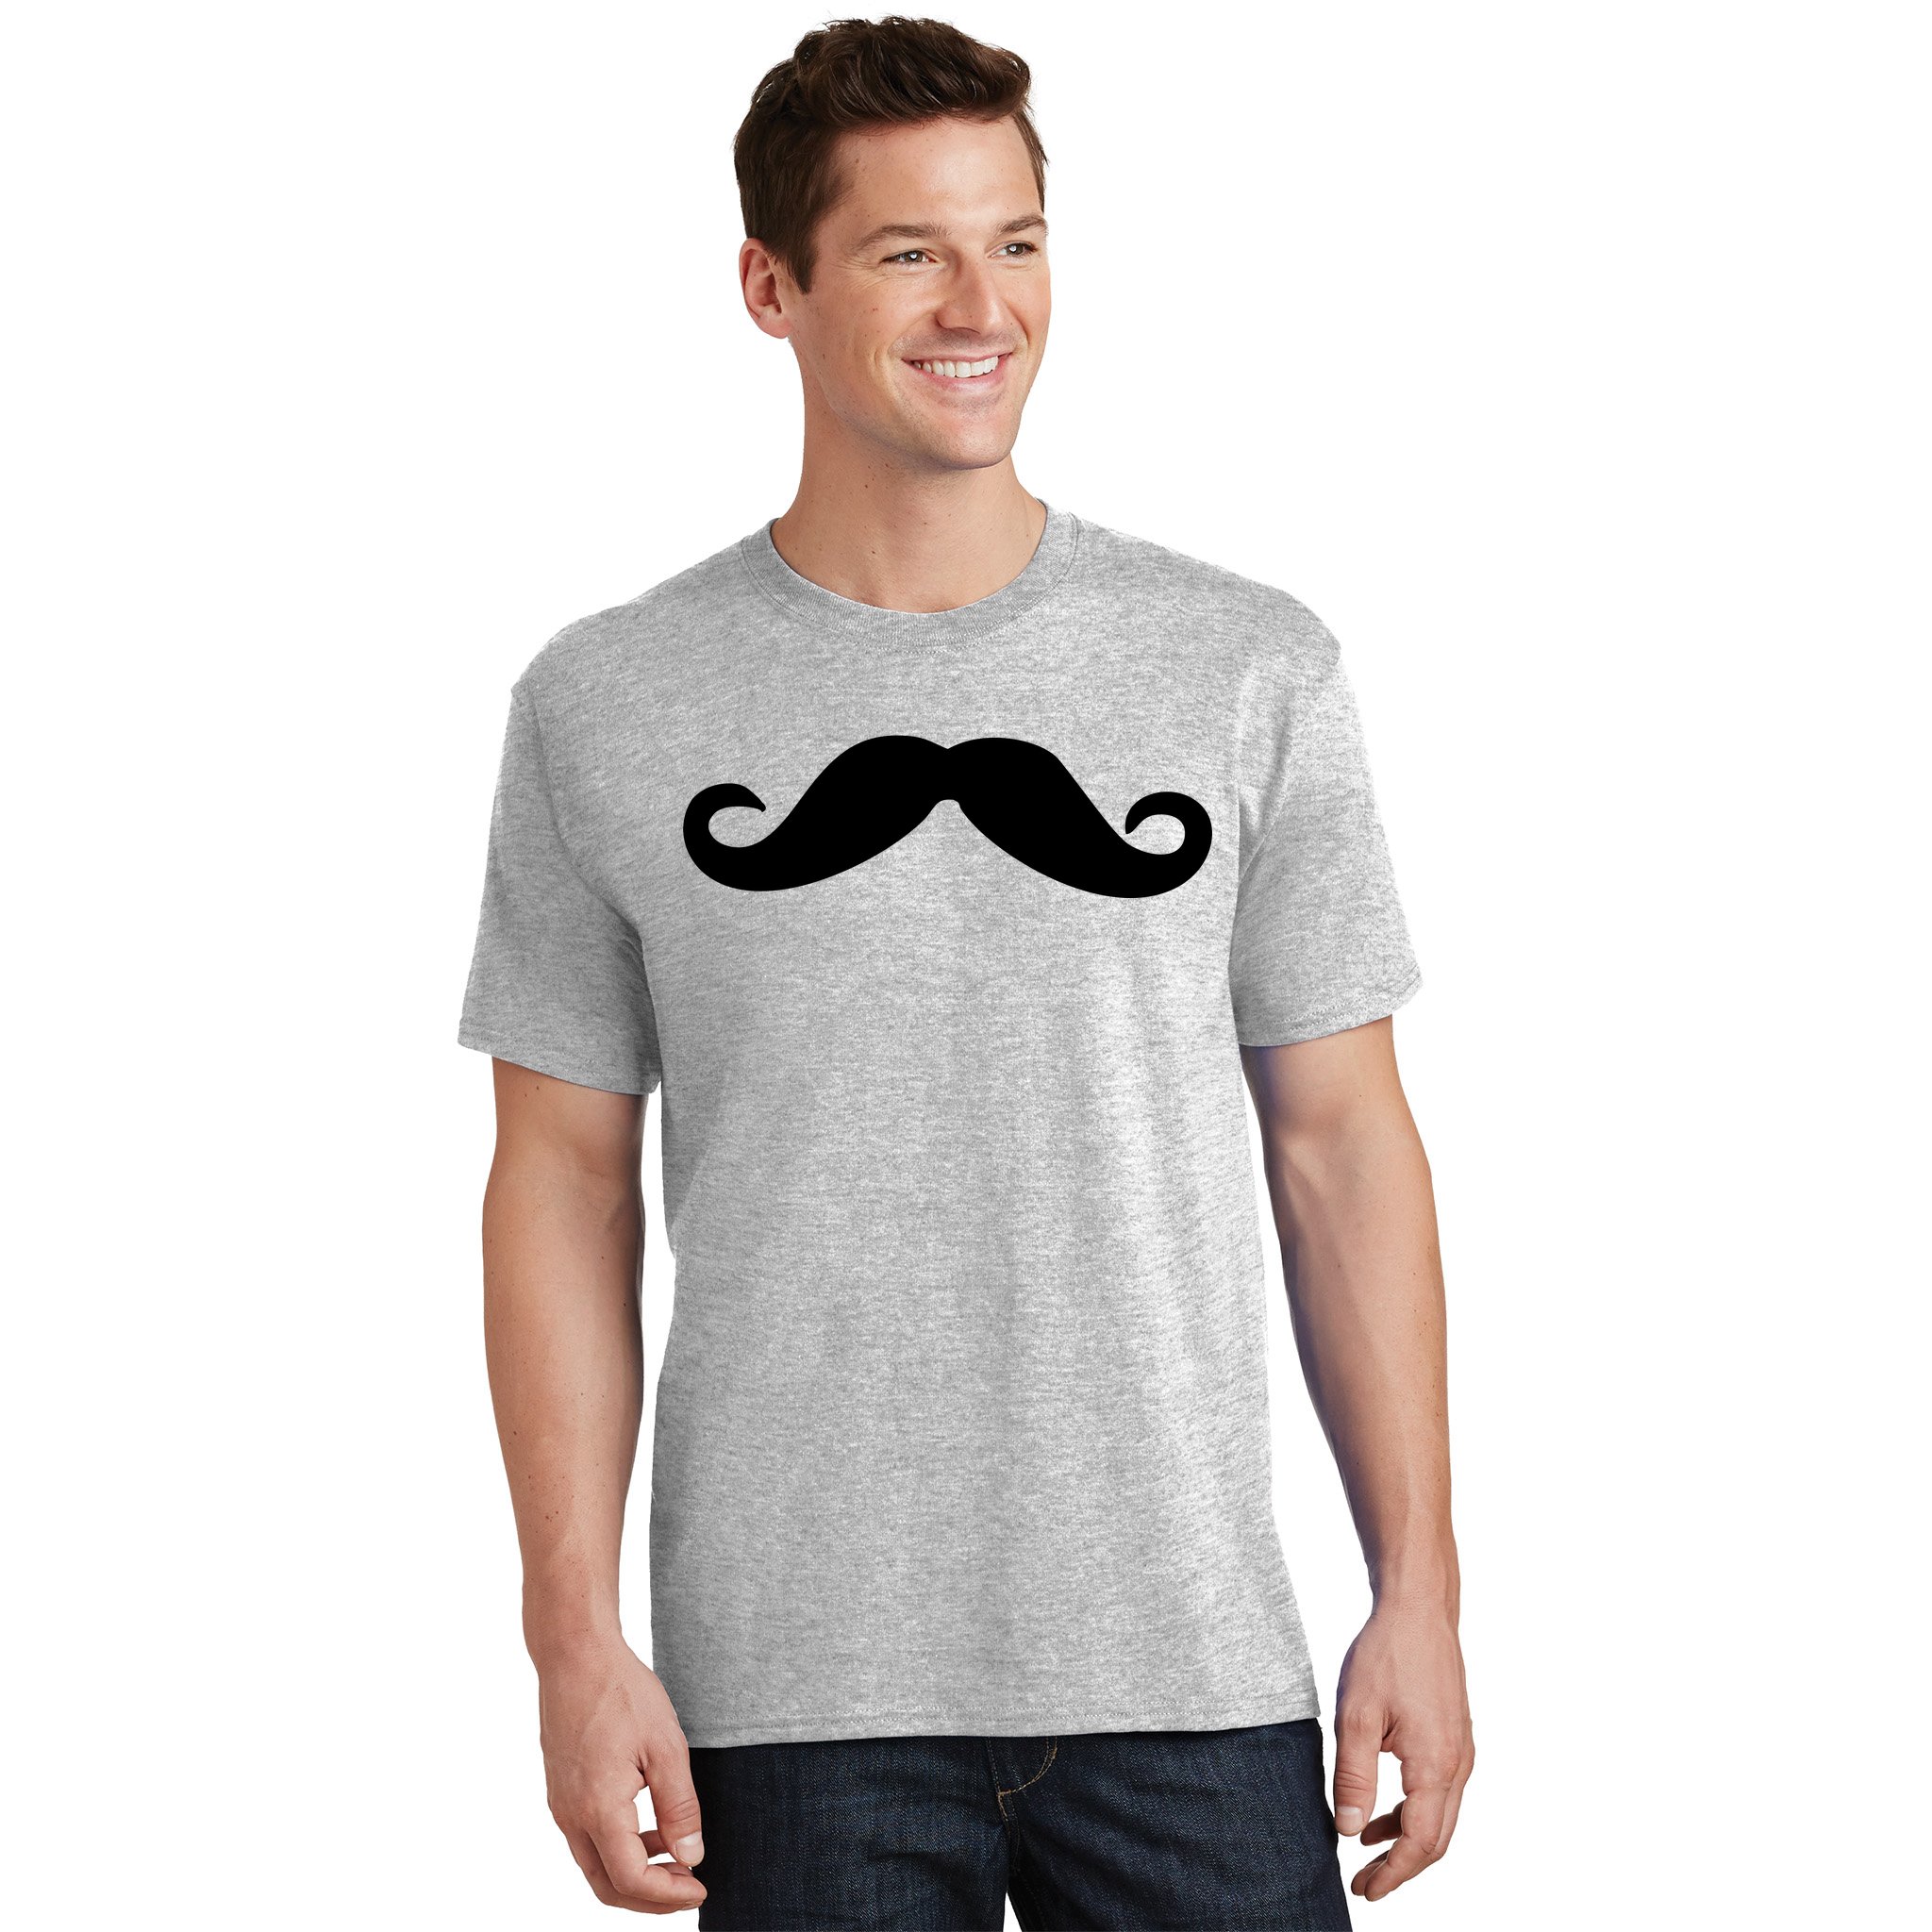 Obey The Beard Funny Moustache Swag T-shirt Vest Tank Top Men Women Unisex 2031 